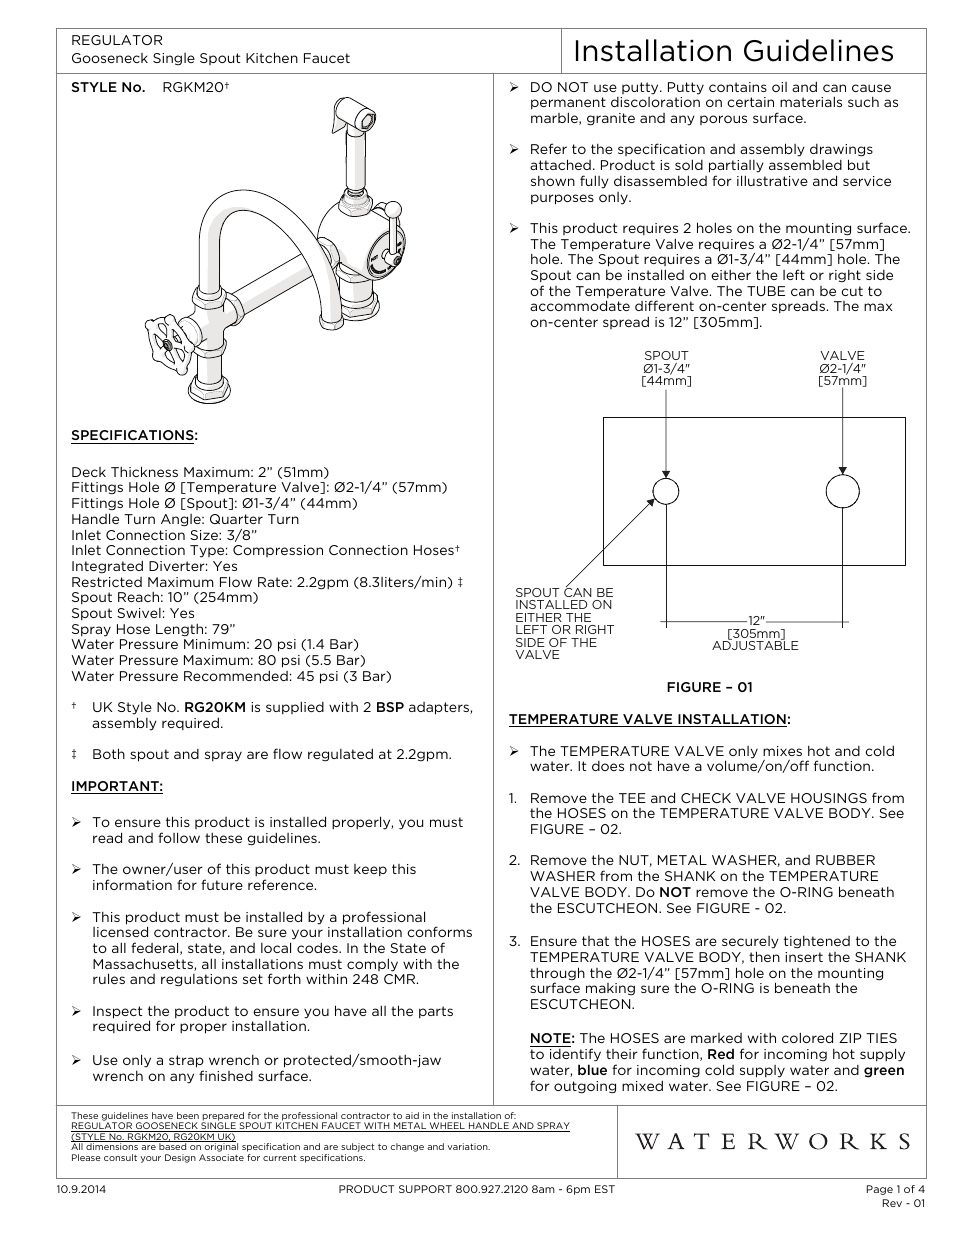 Regulator Gooseneck Single Spout Kitchen Faucet, Metal Wheel Handle and Spray